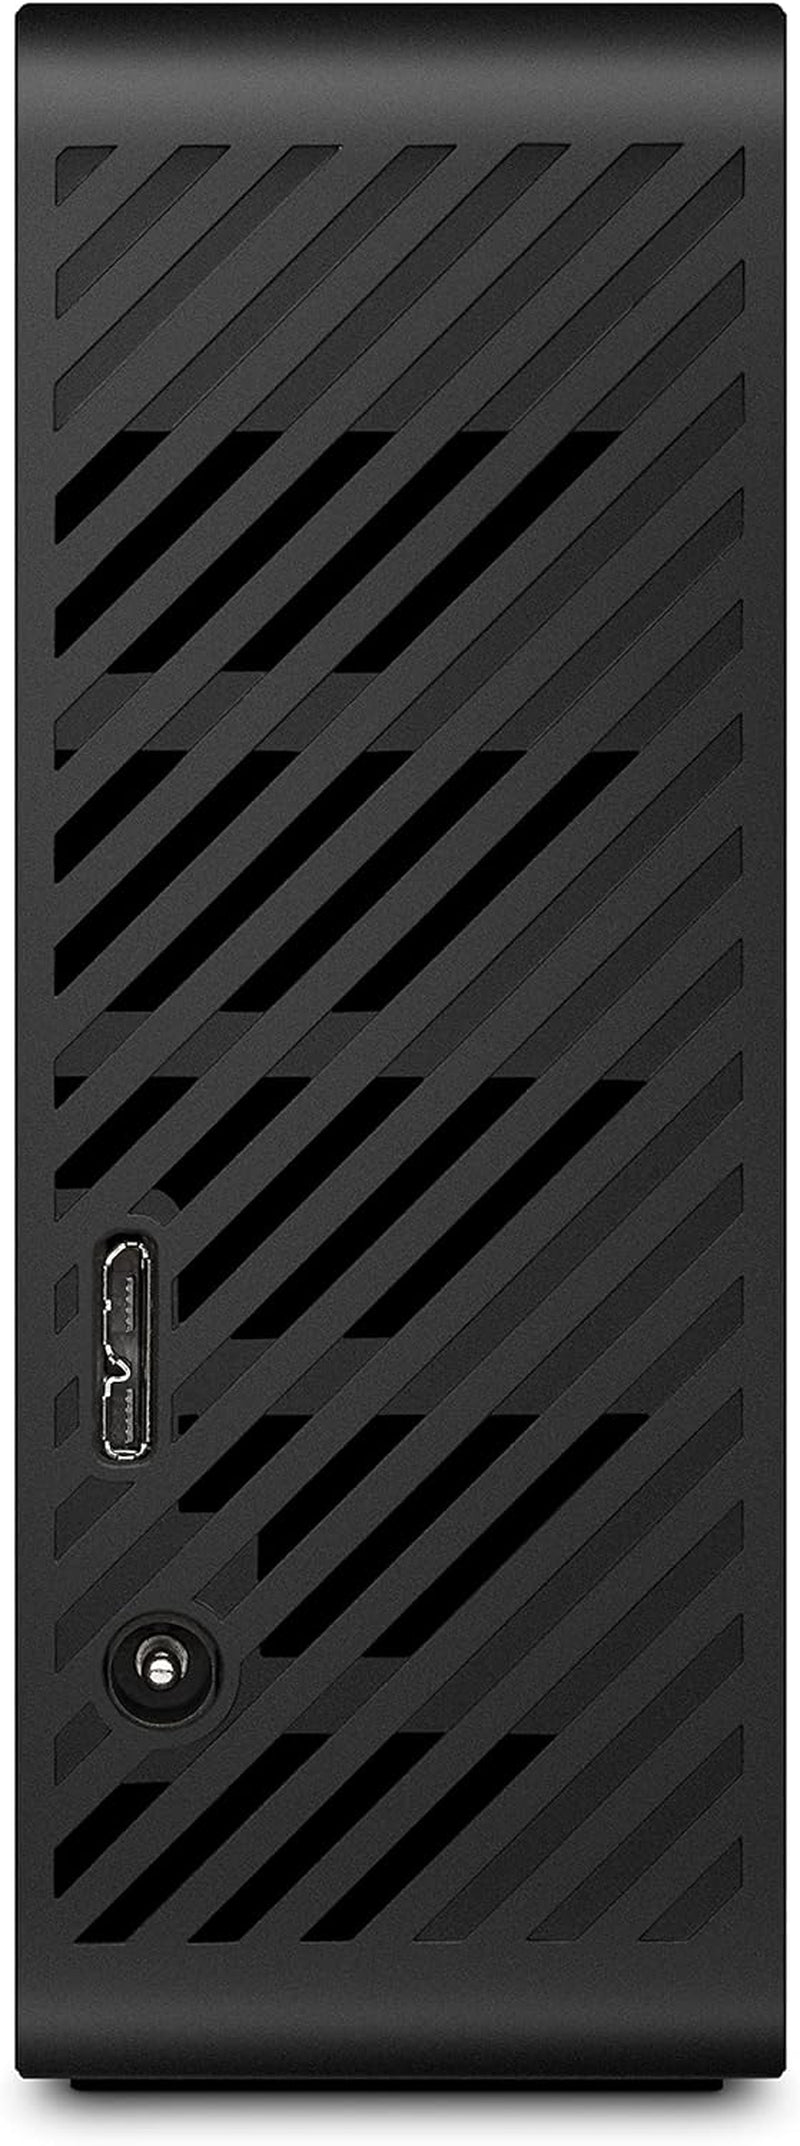 Portable 5TB External Hard Drive HDD USB 3.0 for PC, Mac, PS4, & Xbox - 1-Year Rescue Service (STGX5000400), Black 5TB Portable